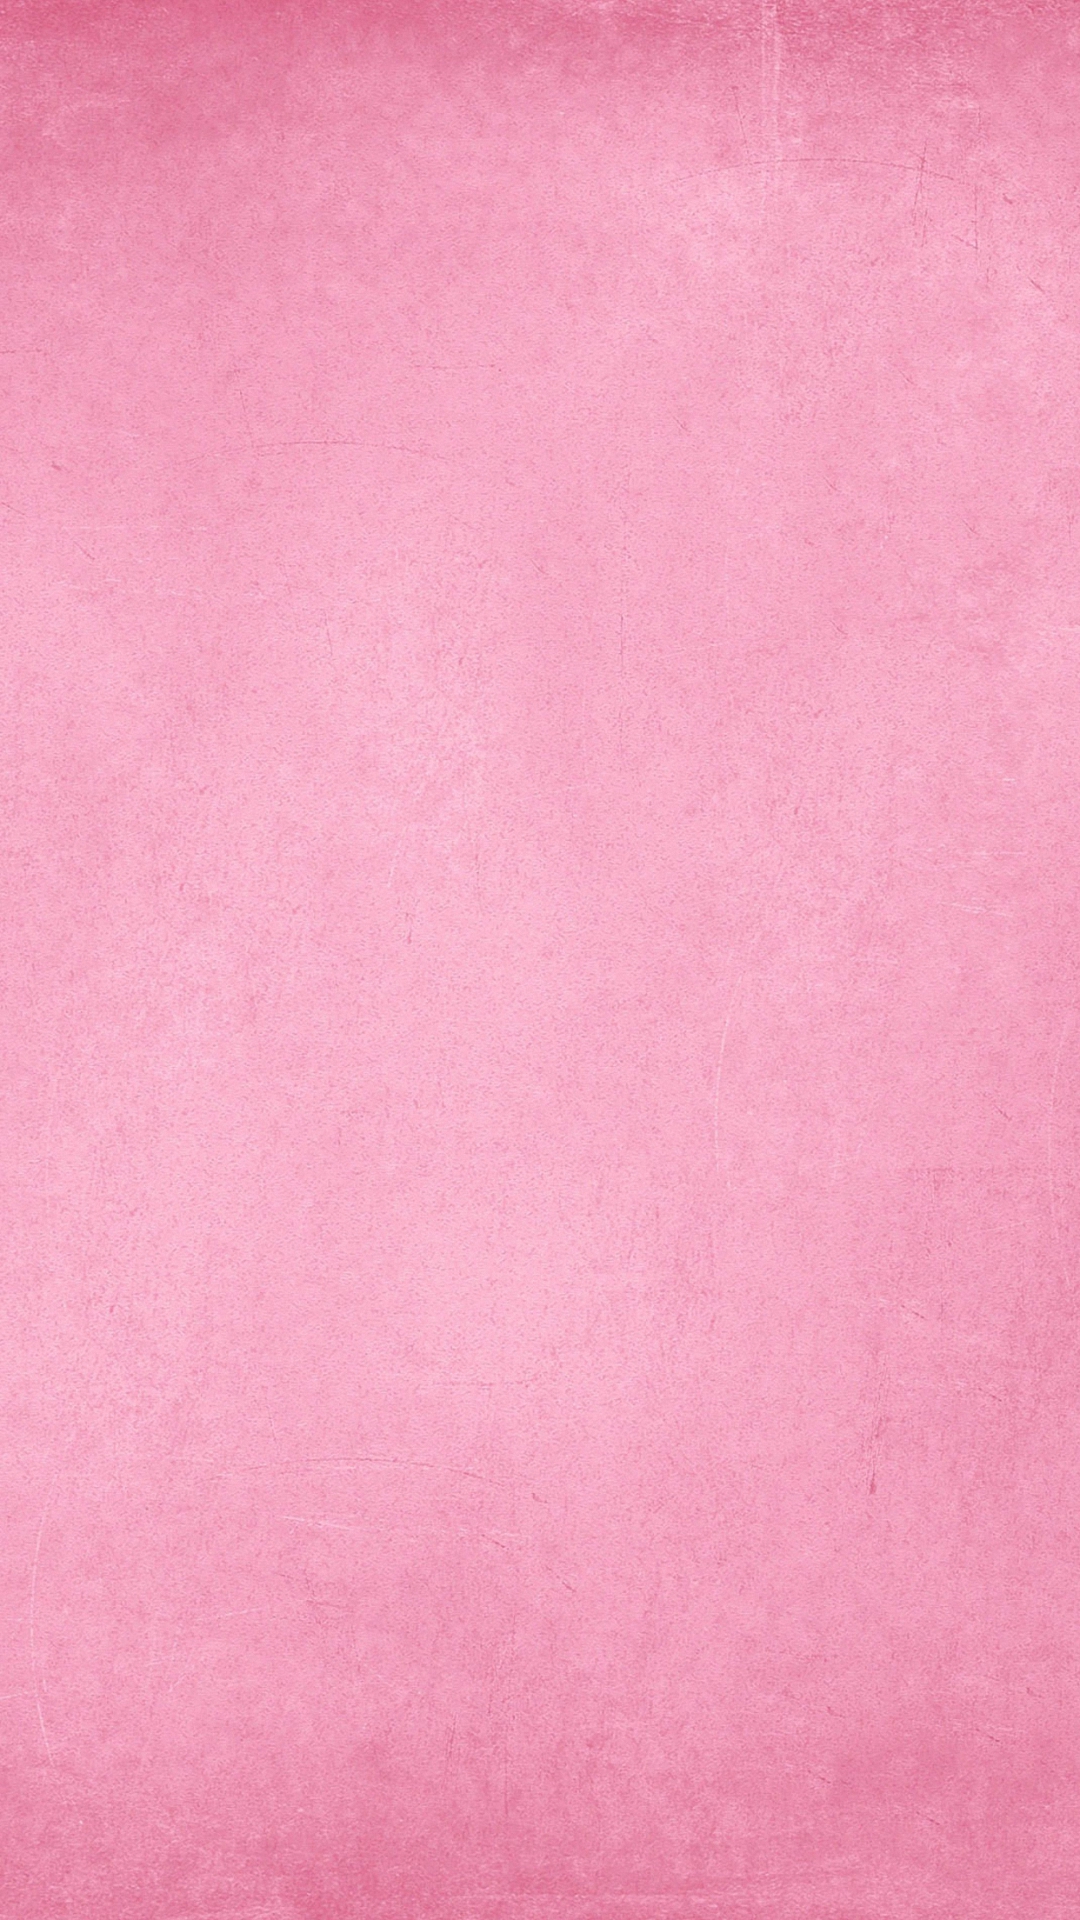 Pink Color iPhone 6s Wallpaper HD